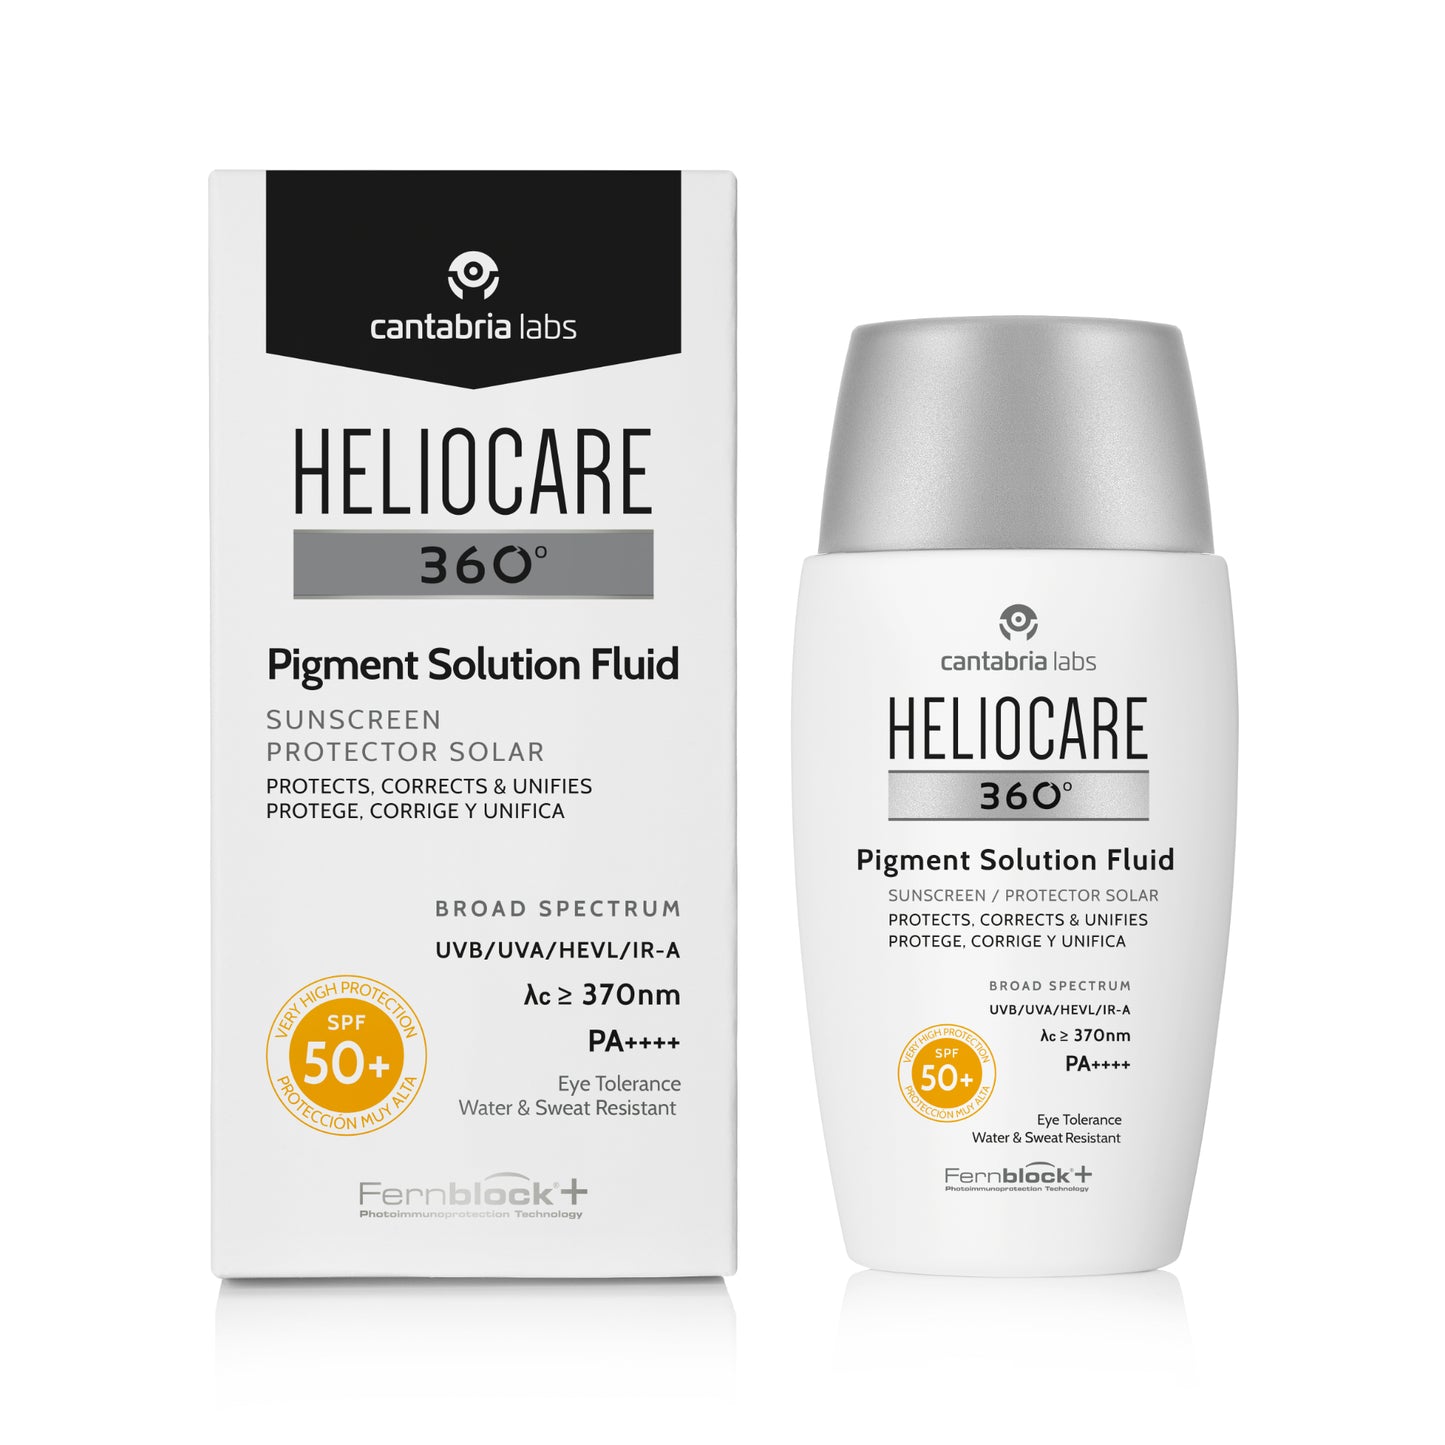 Heliocare 360° Pigment Solution Fluid SPF 50+